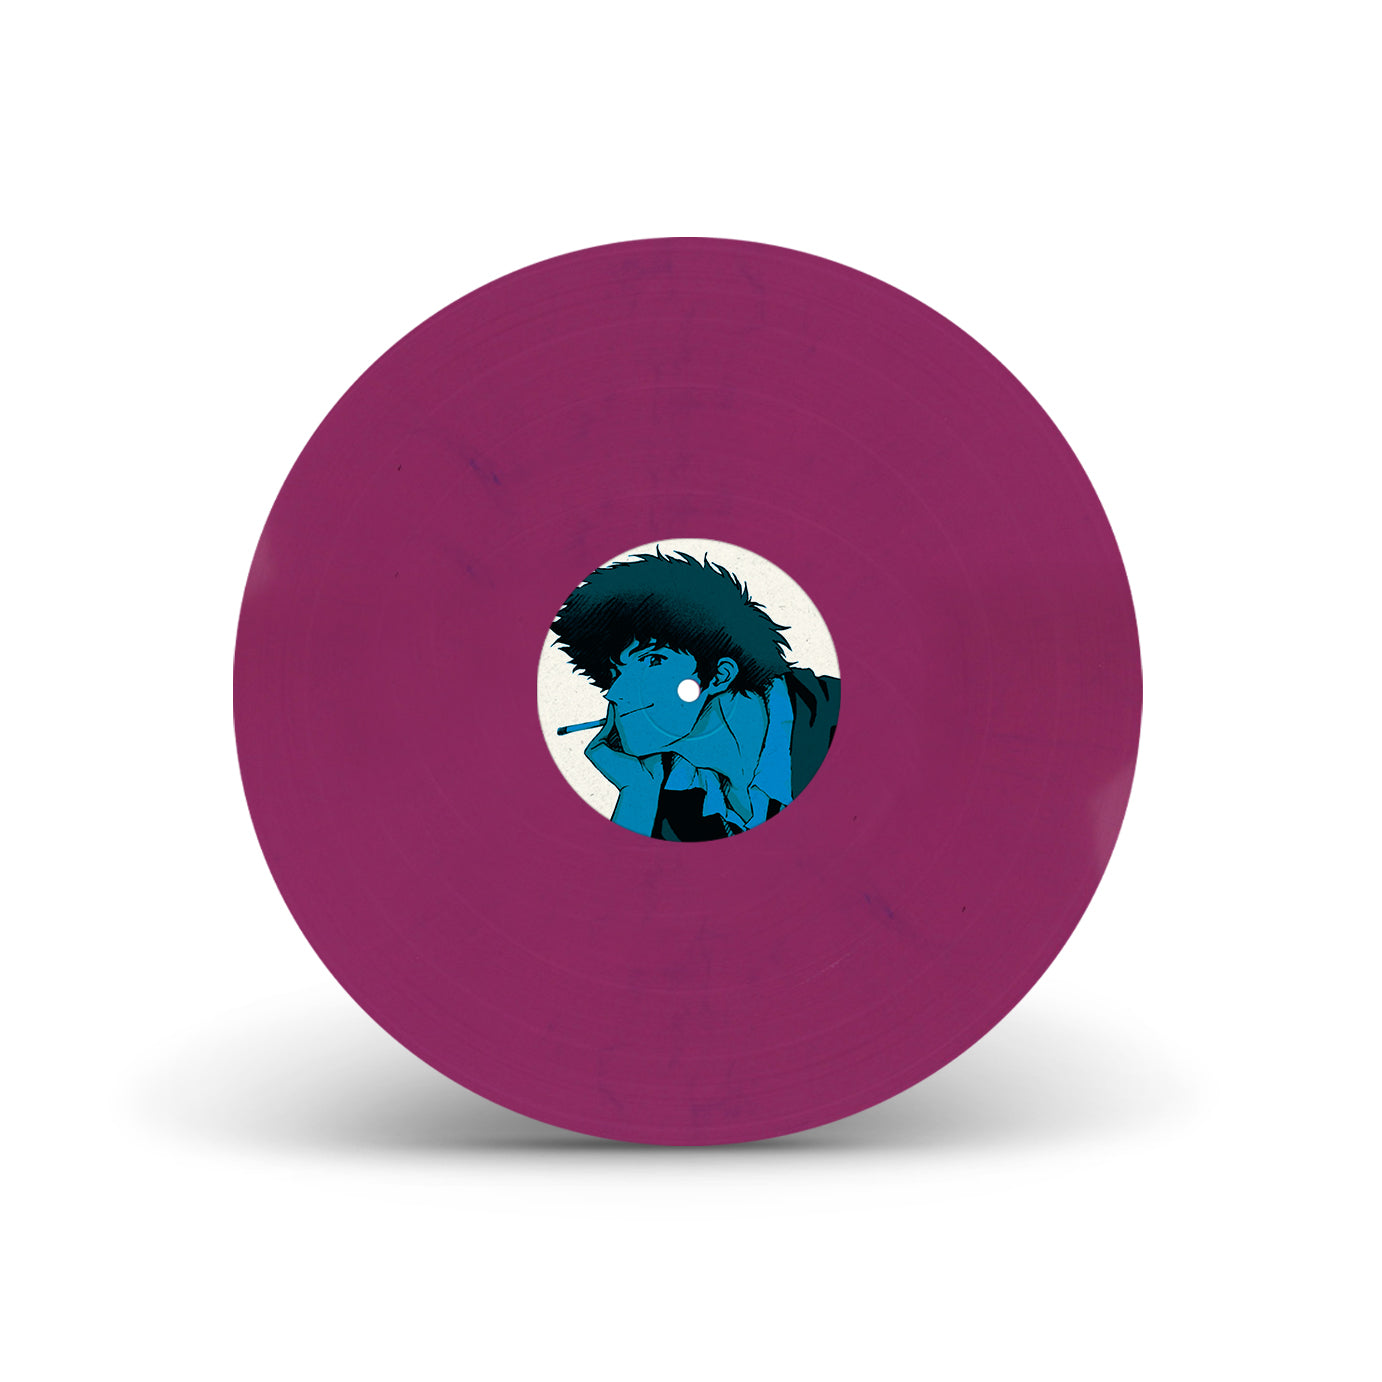 Seatbelts - COWBOY BEBOP  - Songs for the Cosmic Sofa: Pink & Dark Blue Marbled Vinyl LP